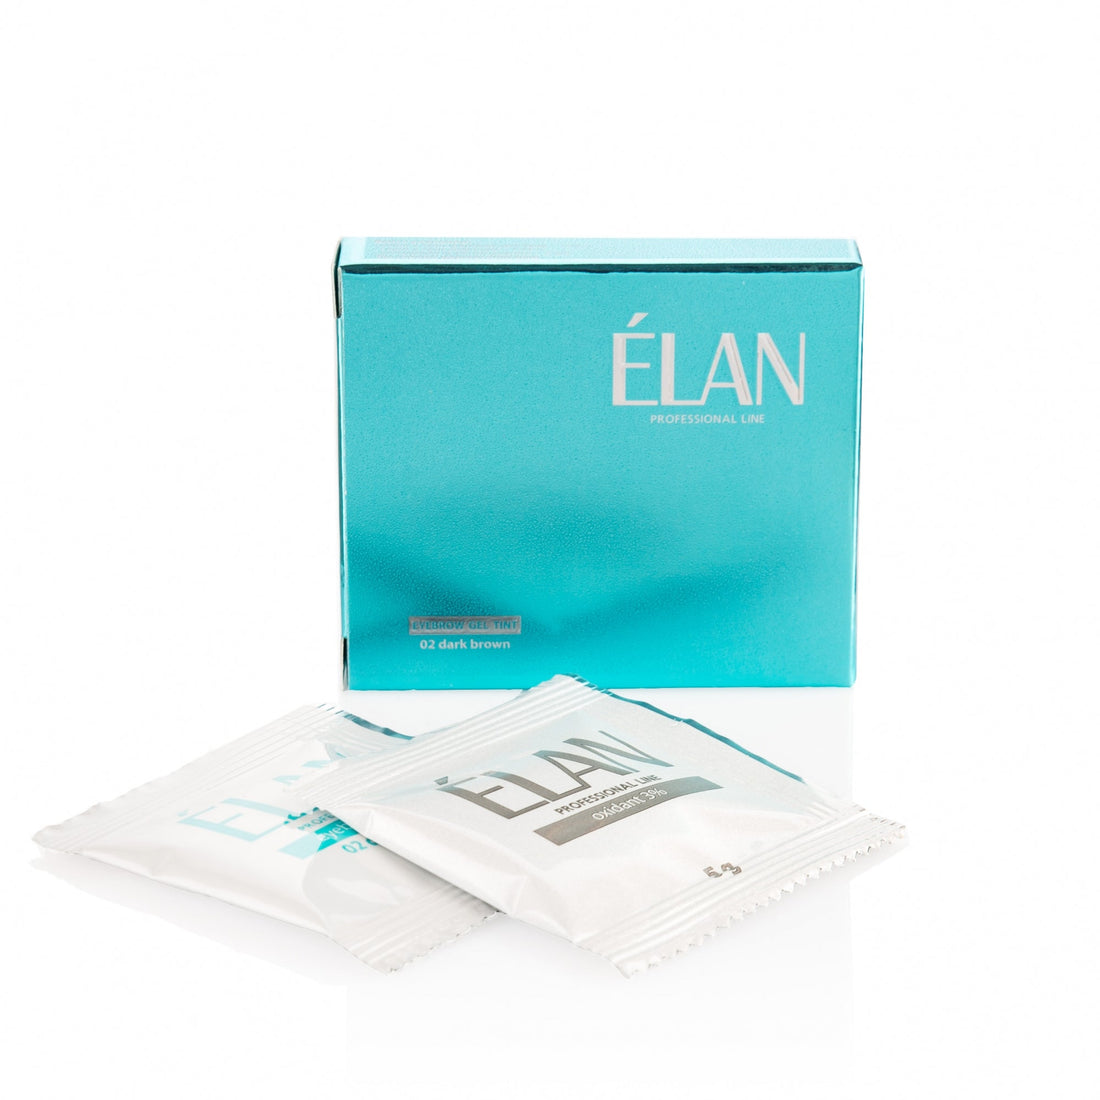 ÉLAN - Eyebrow gel tint with Oxidant, 02 Dark Brown (1 sachets - 15 treatments)